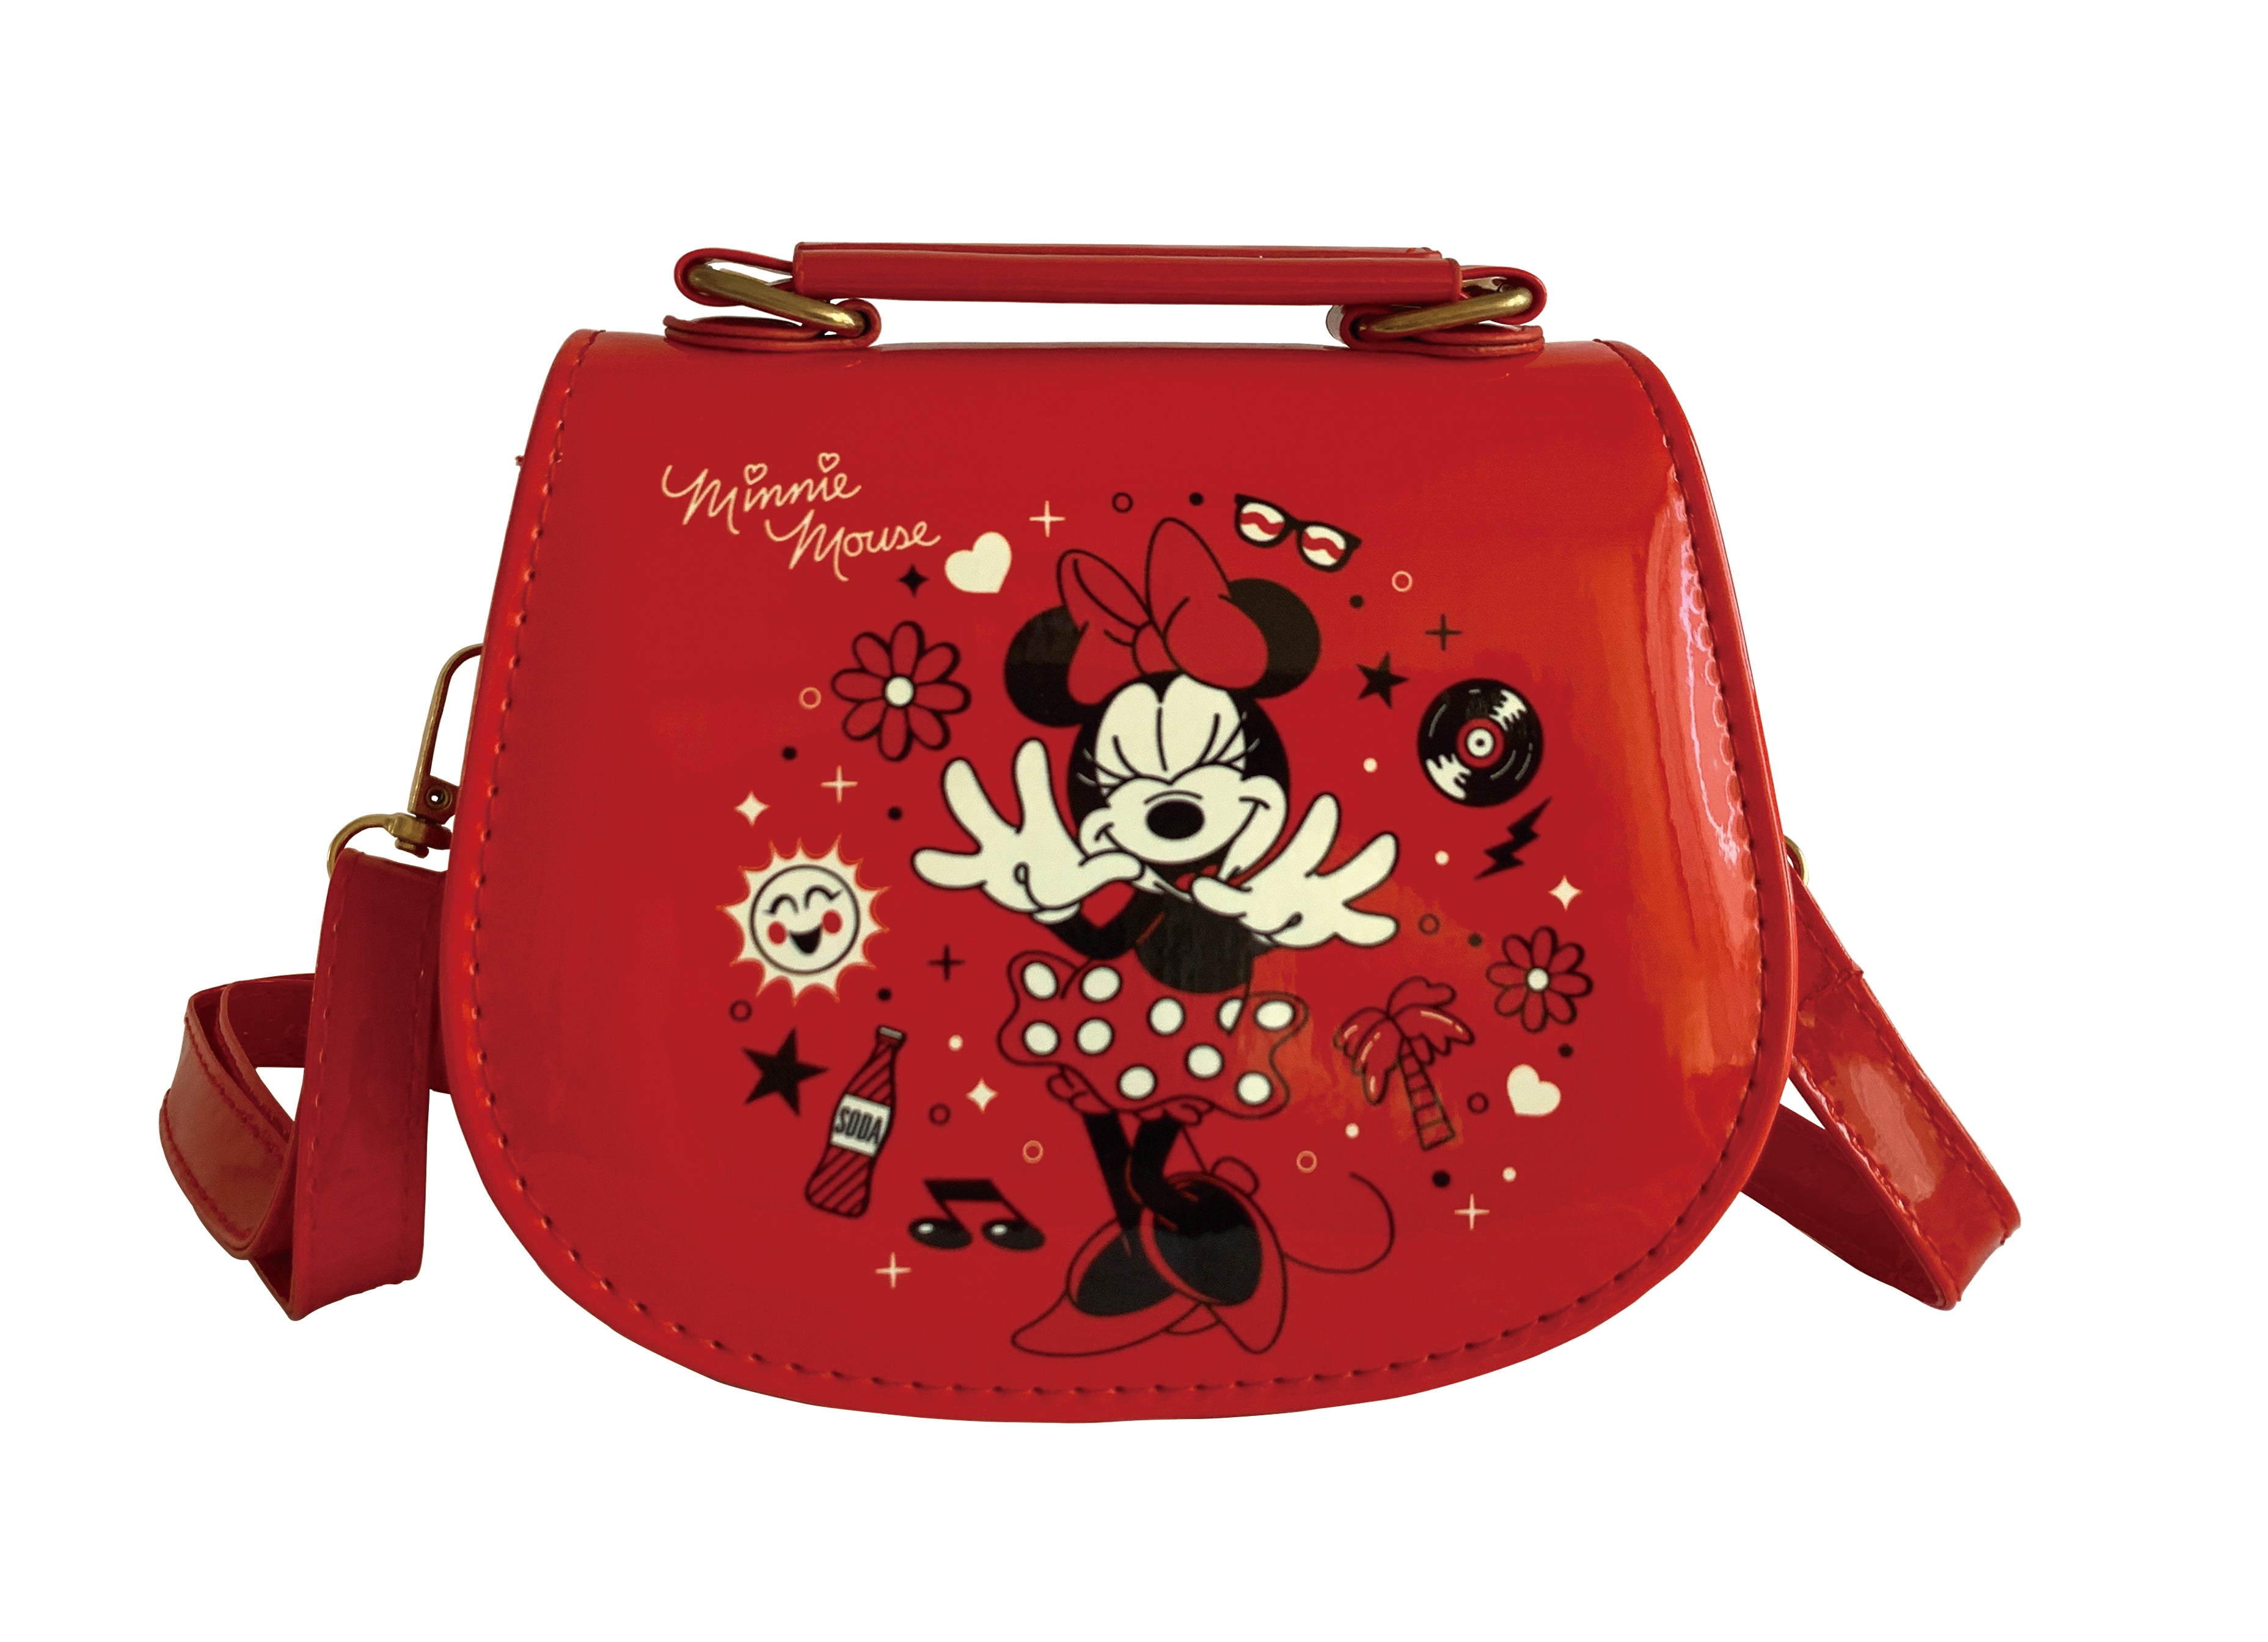 Minnie Mouse - Kids handbag DIS209 - Red-2